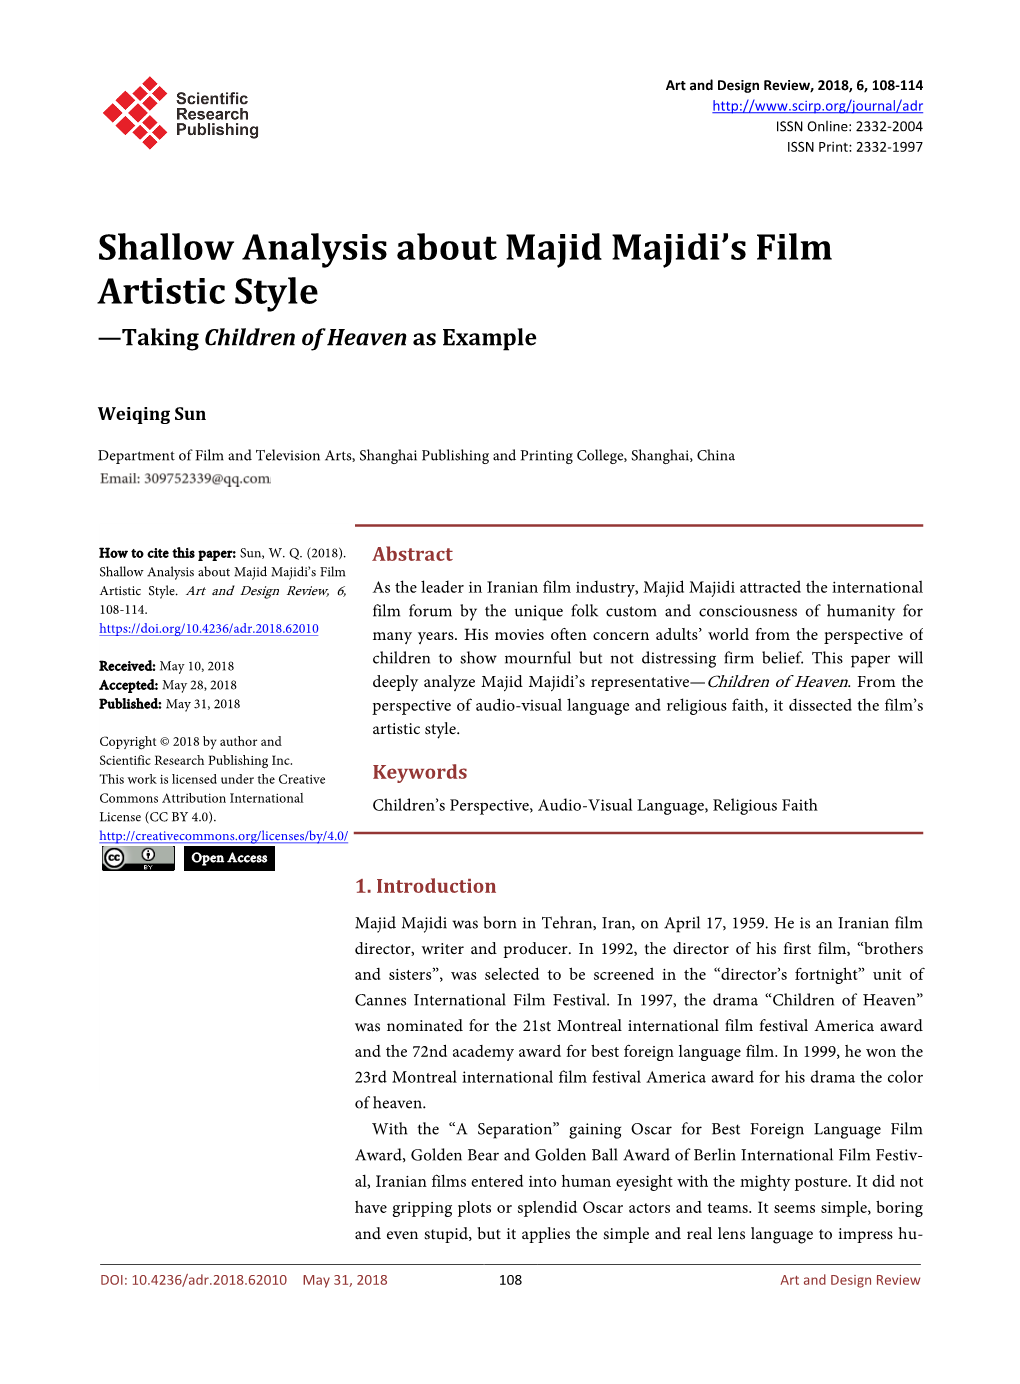 Shallow Analysis About Majid Majidi's Film Artistic Style